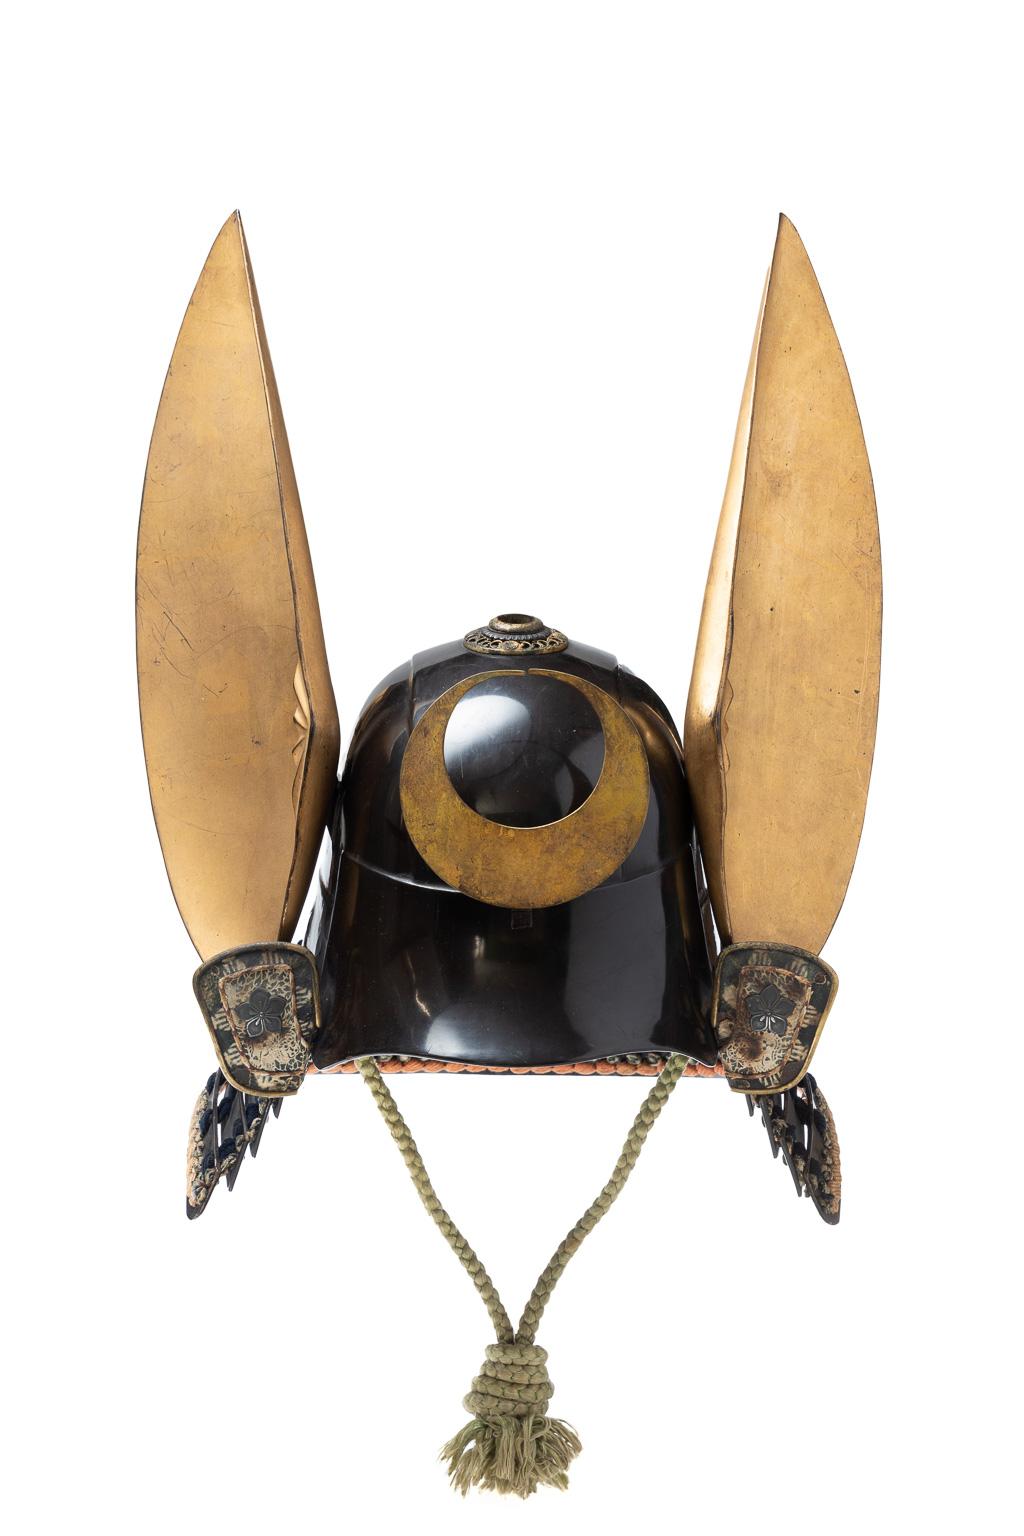 Lacquer Hineno-zunari kabuto, head-shaped samurai helmet with hamaguri (clams) 